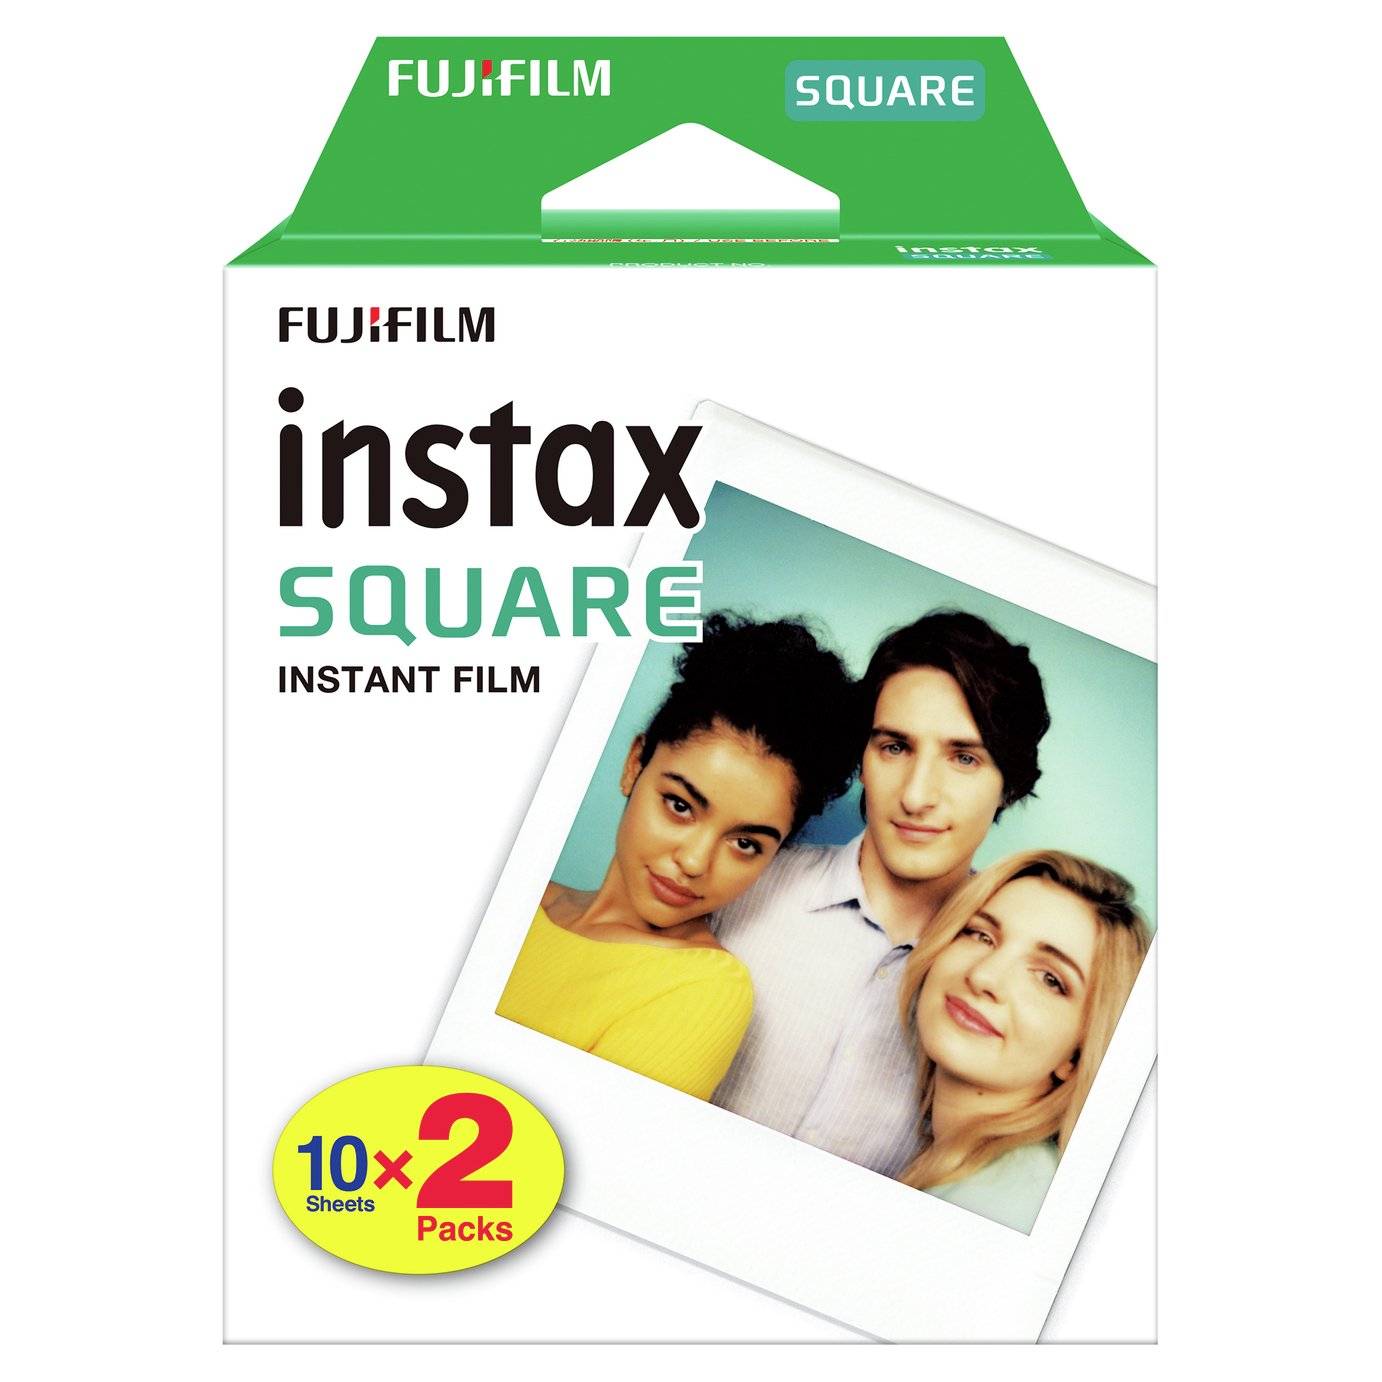 Instax Square Camera Film Review